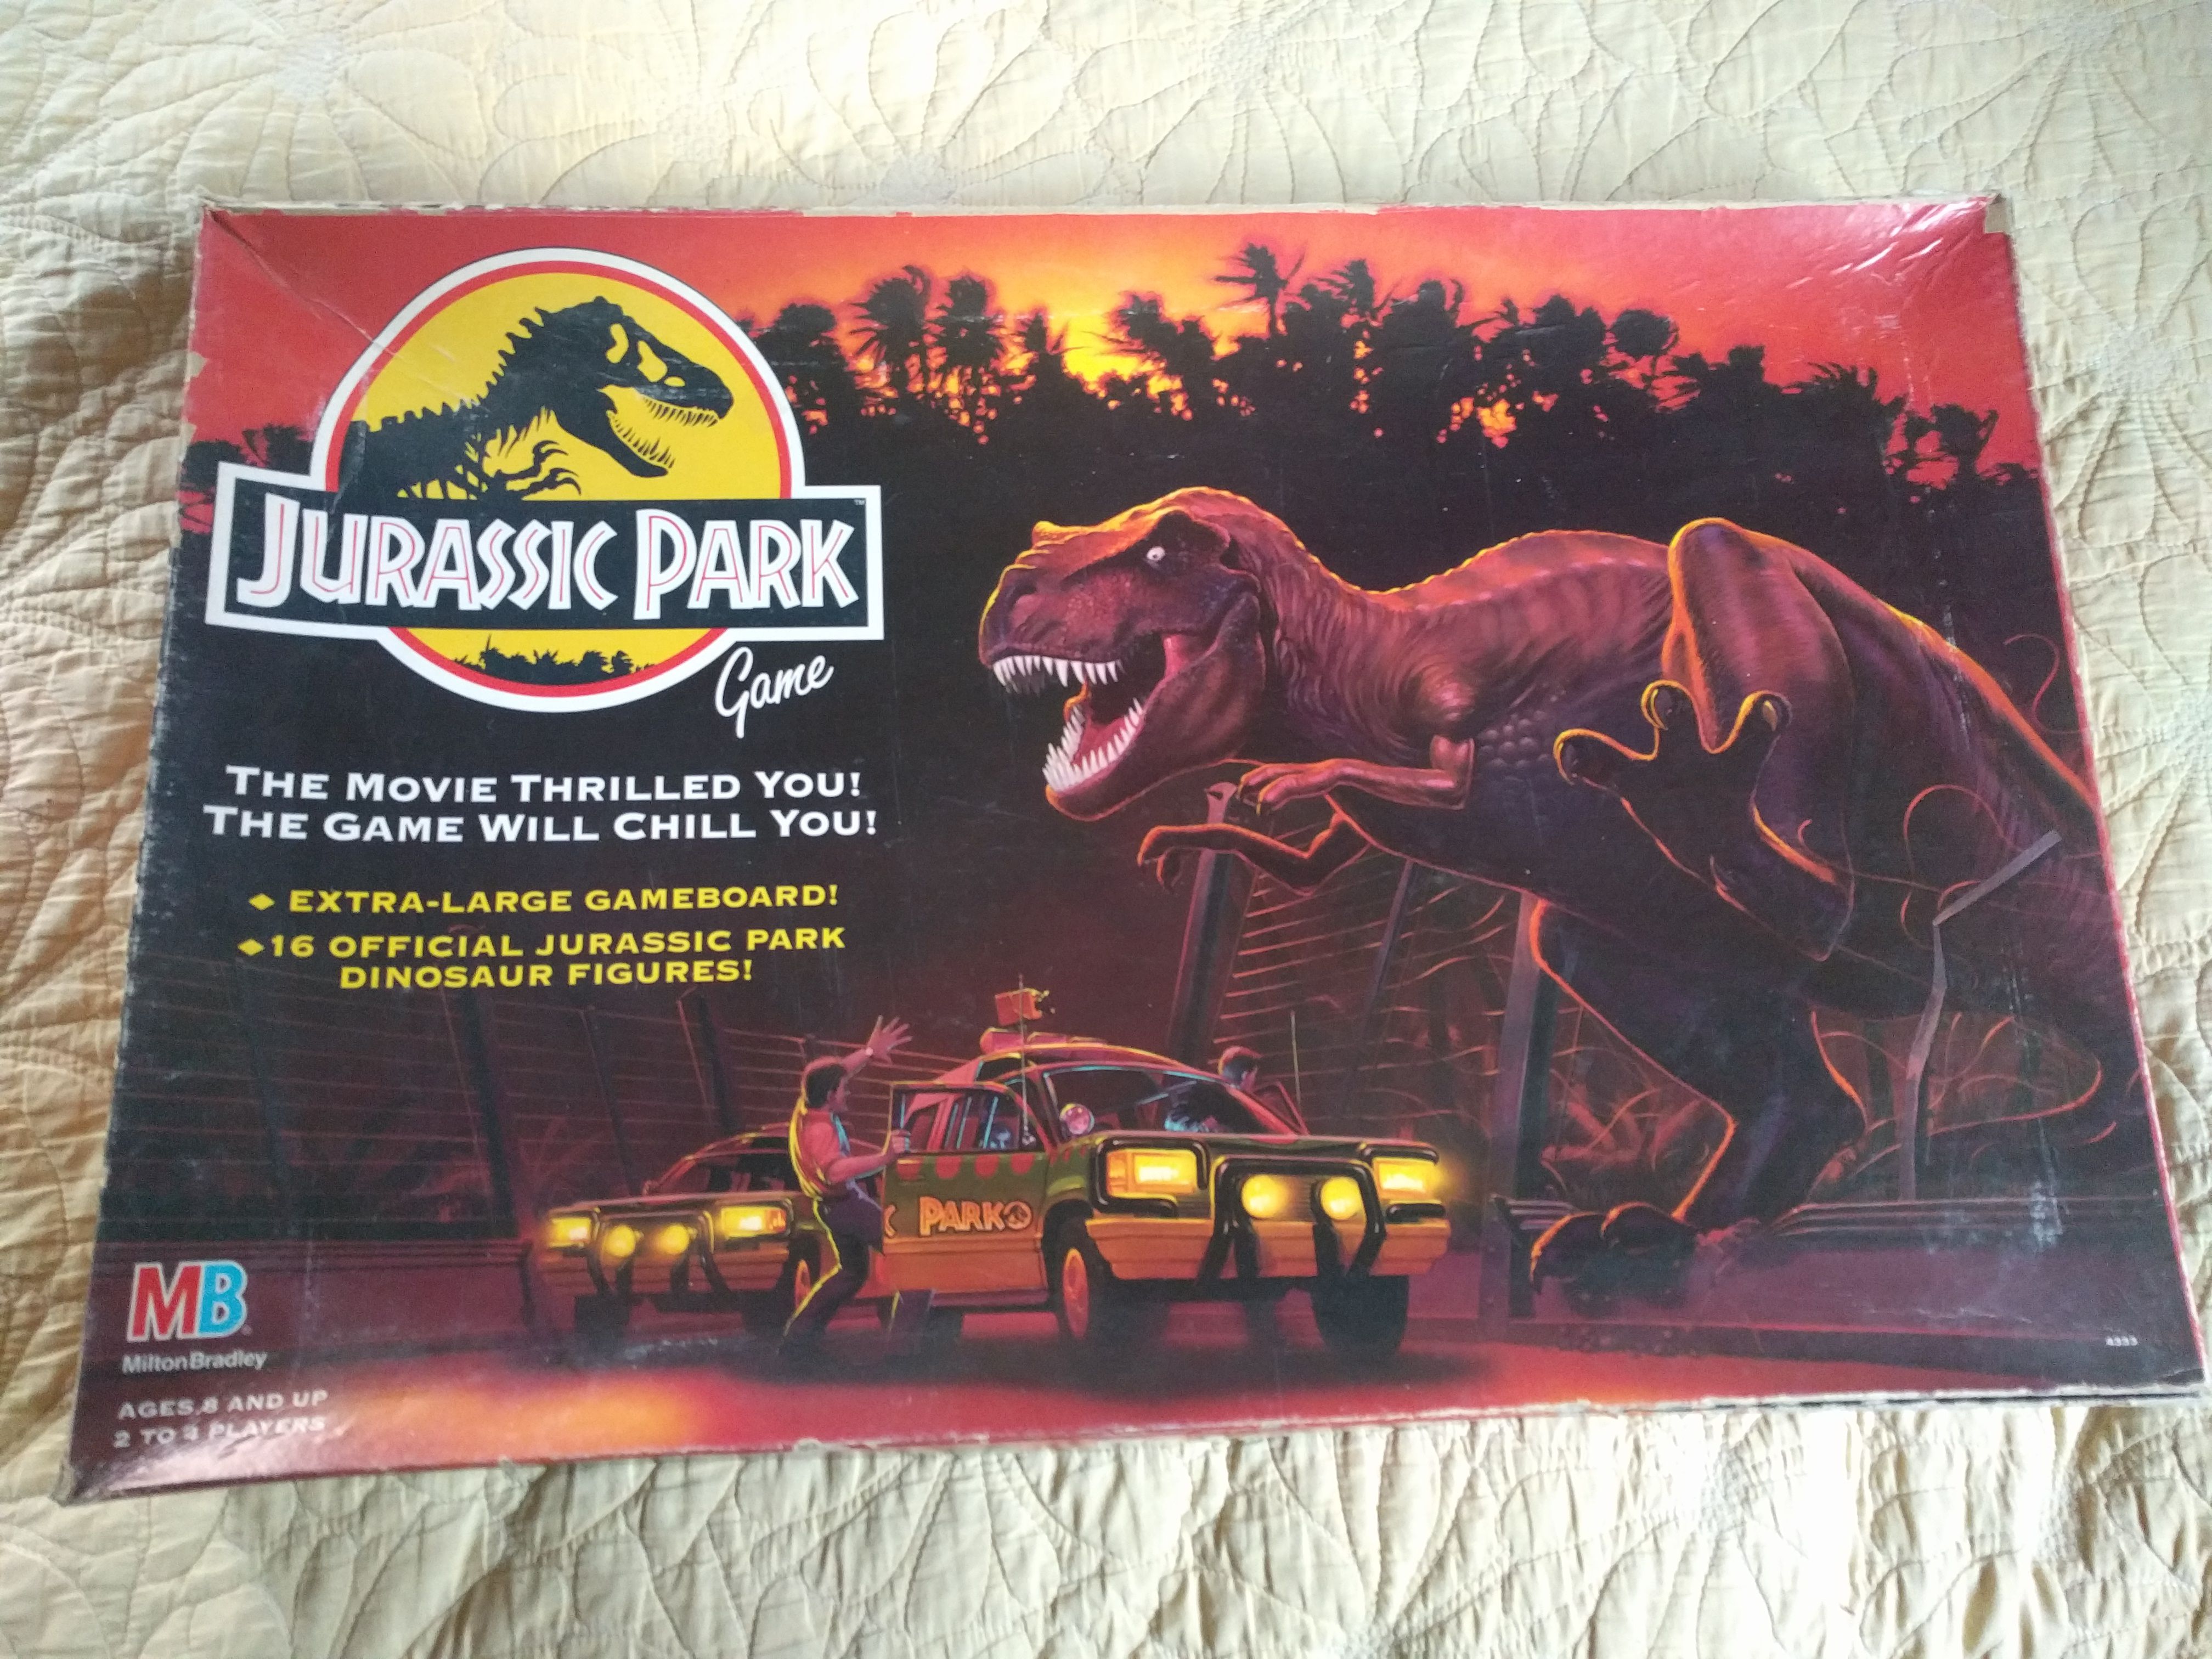 Original Jurassic Park game.